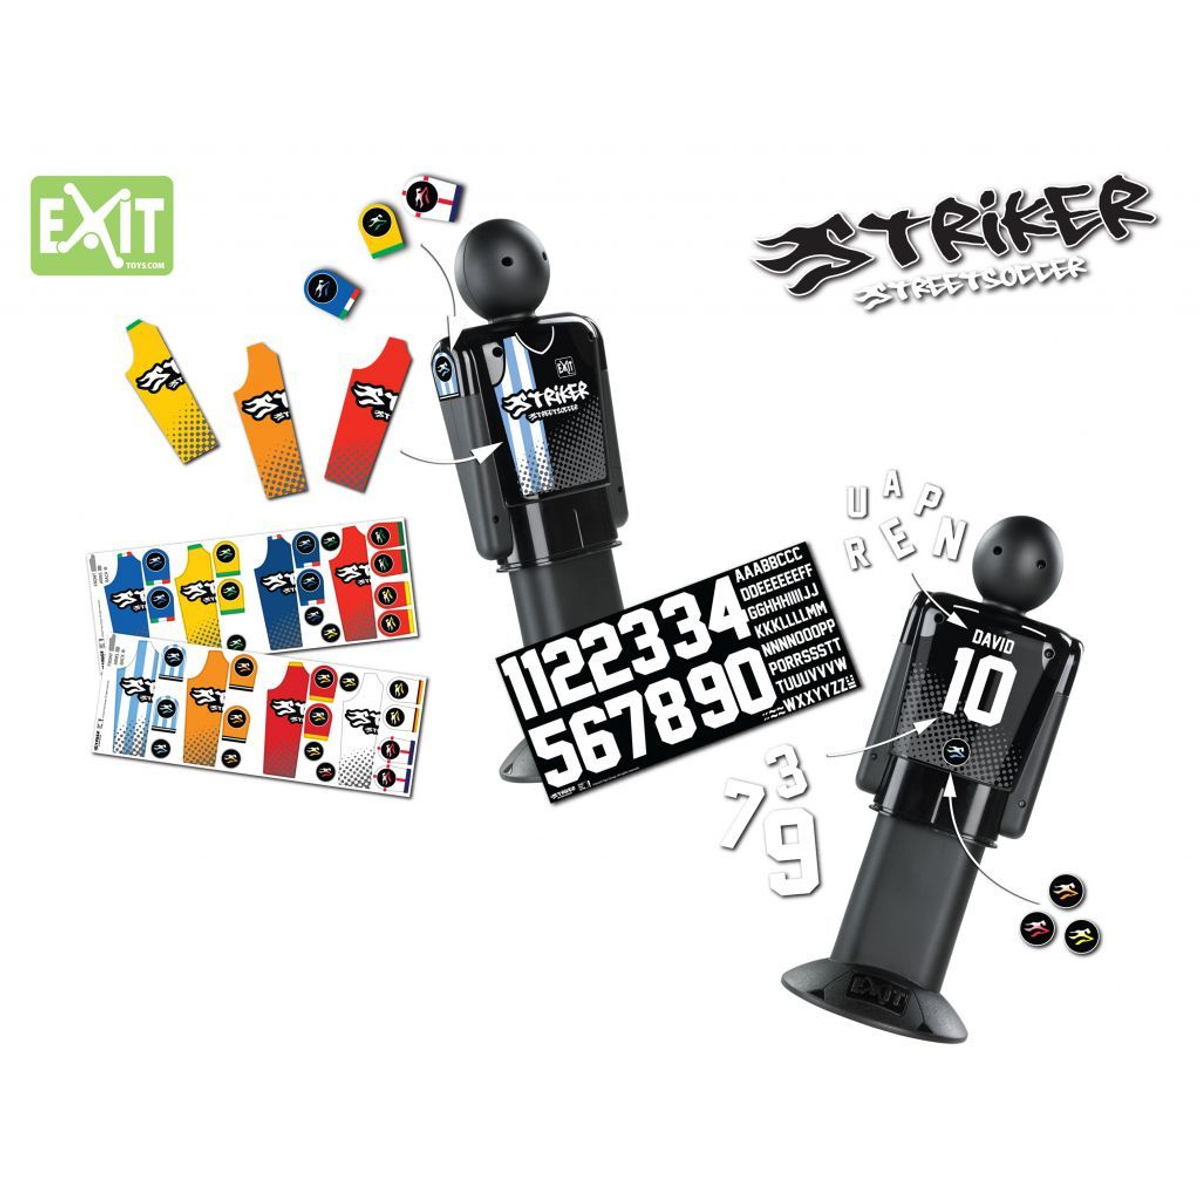 Exit Striker Streetsoccer - Set van 4